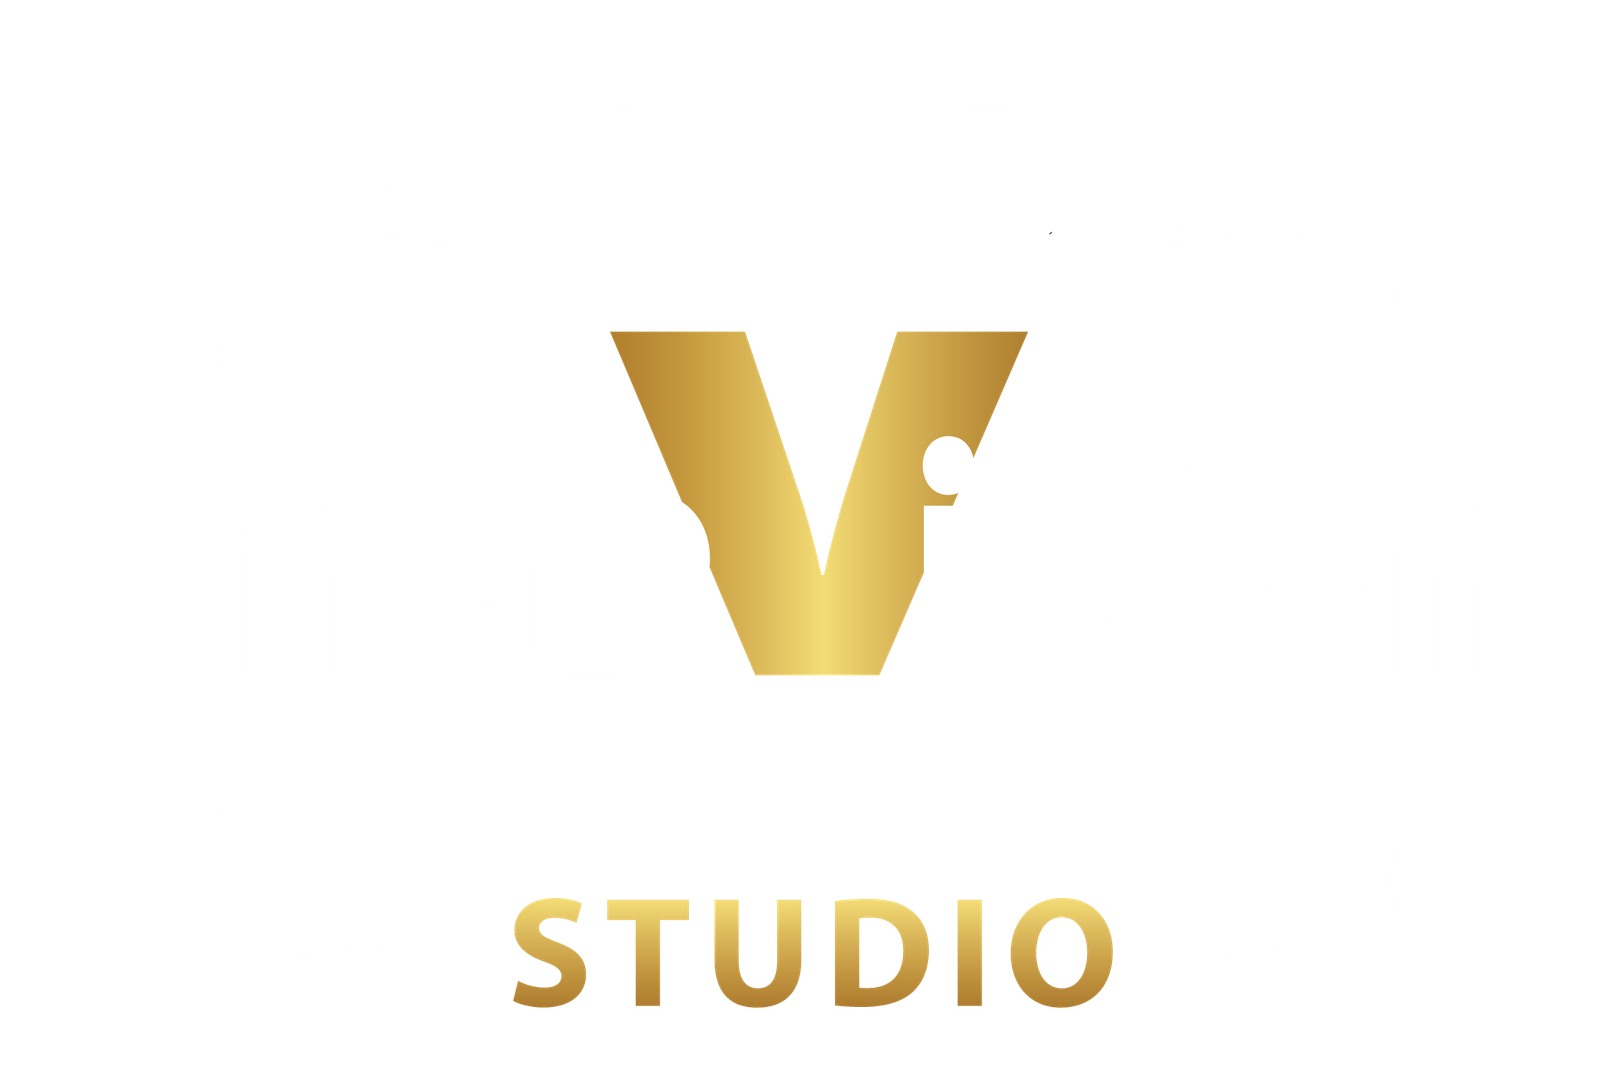 Snapvisionstudio